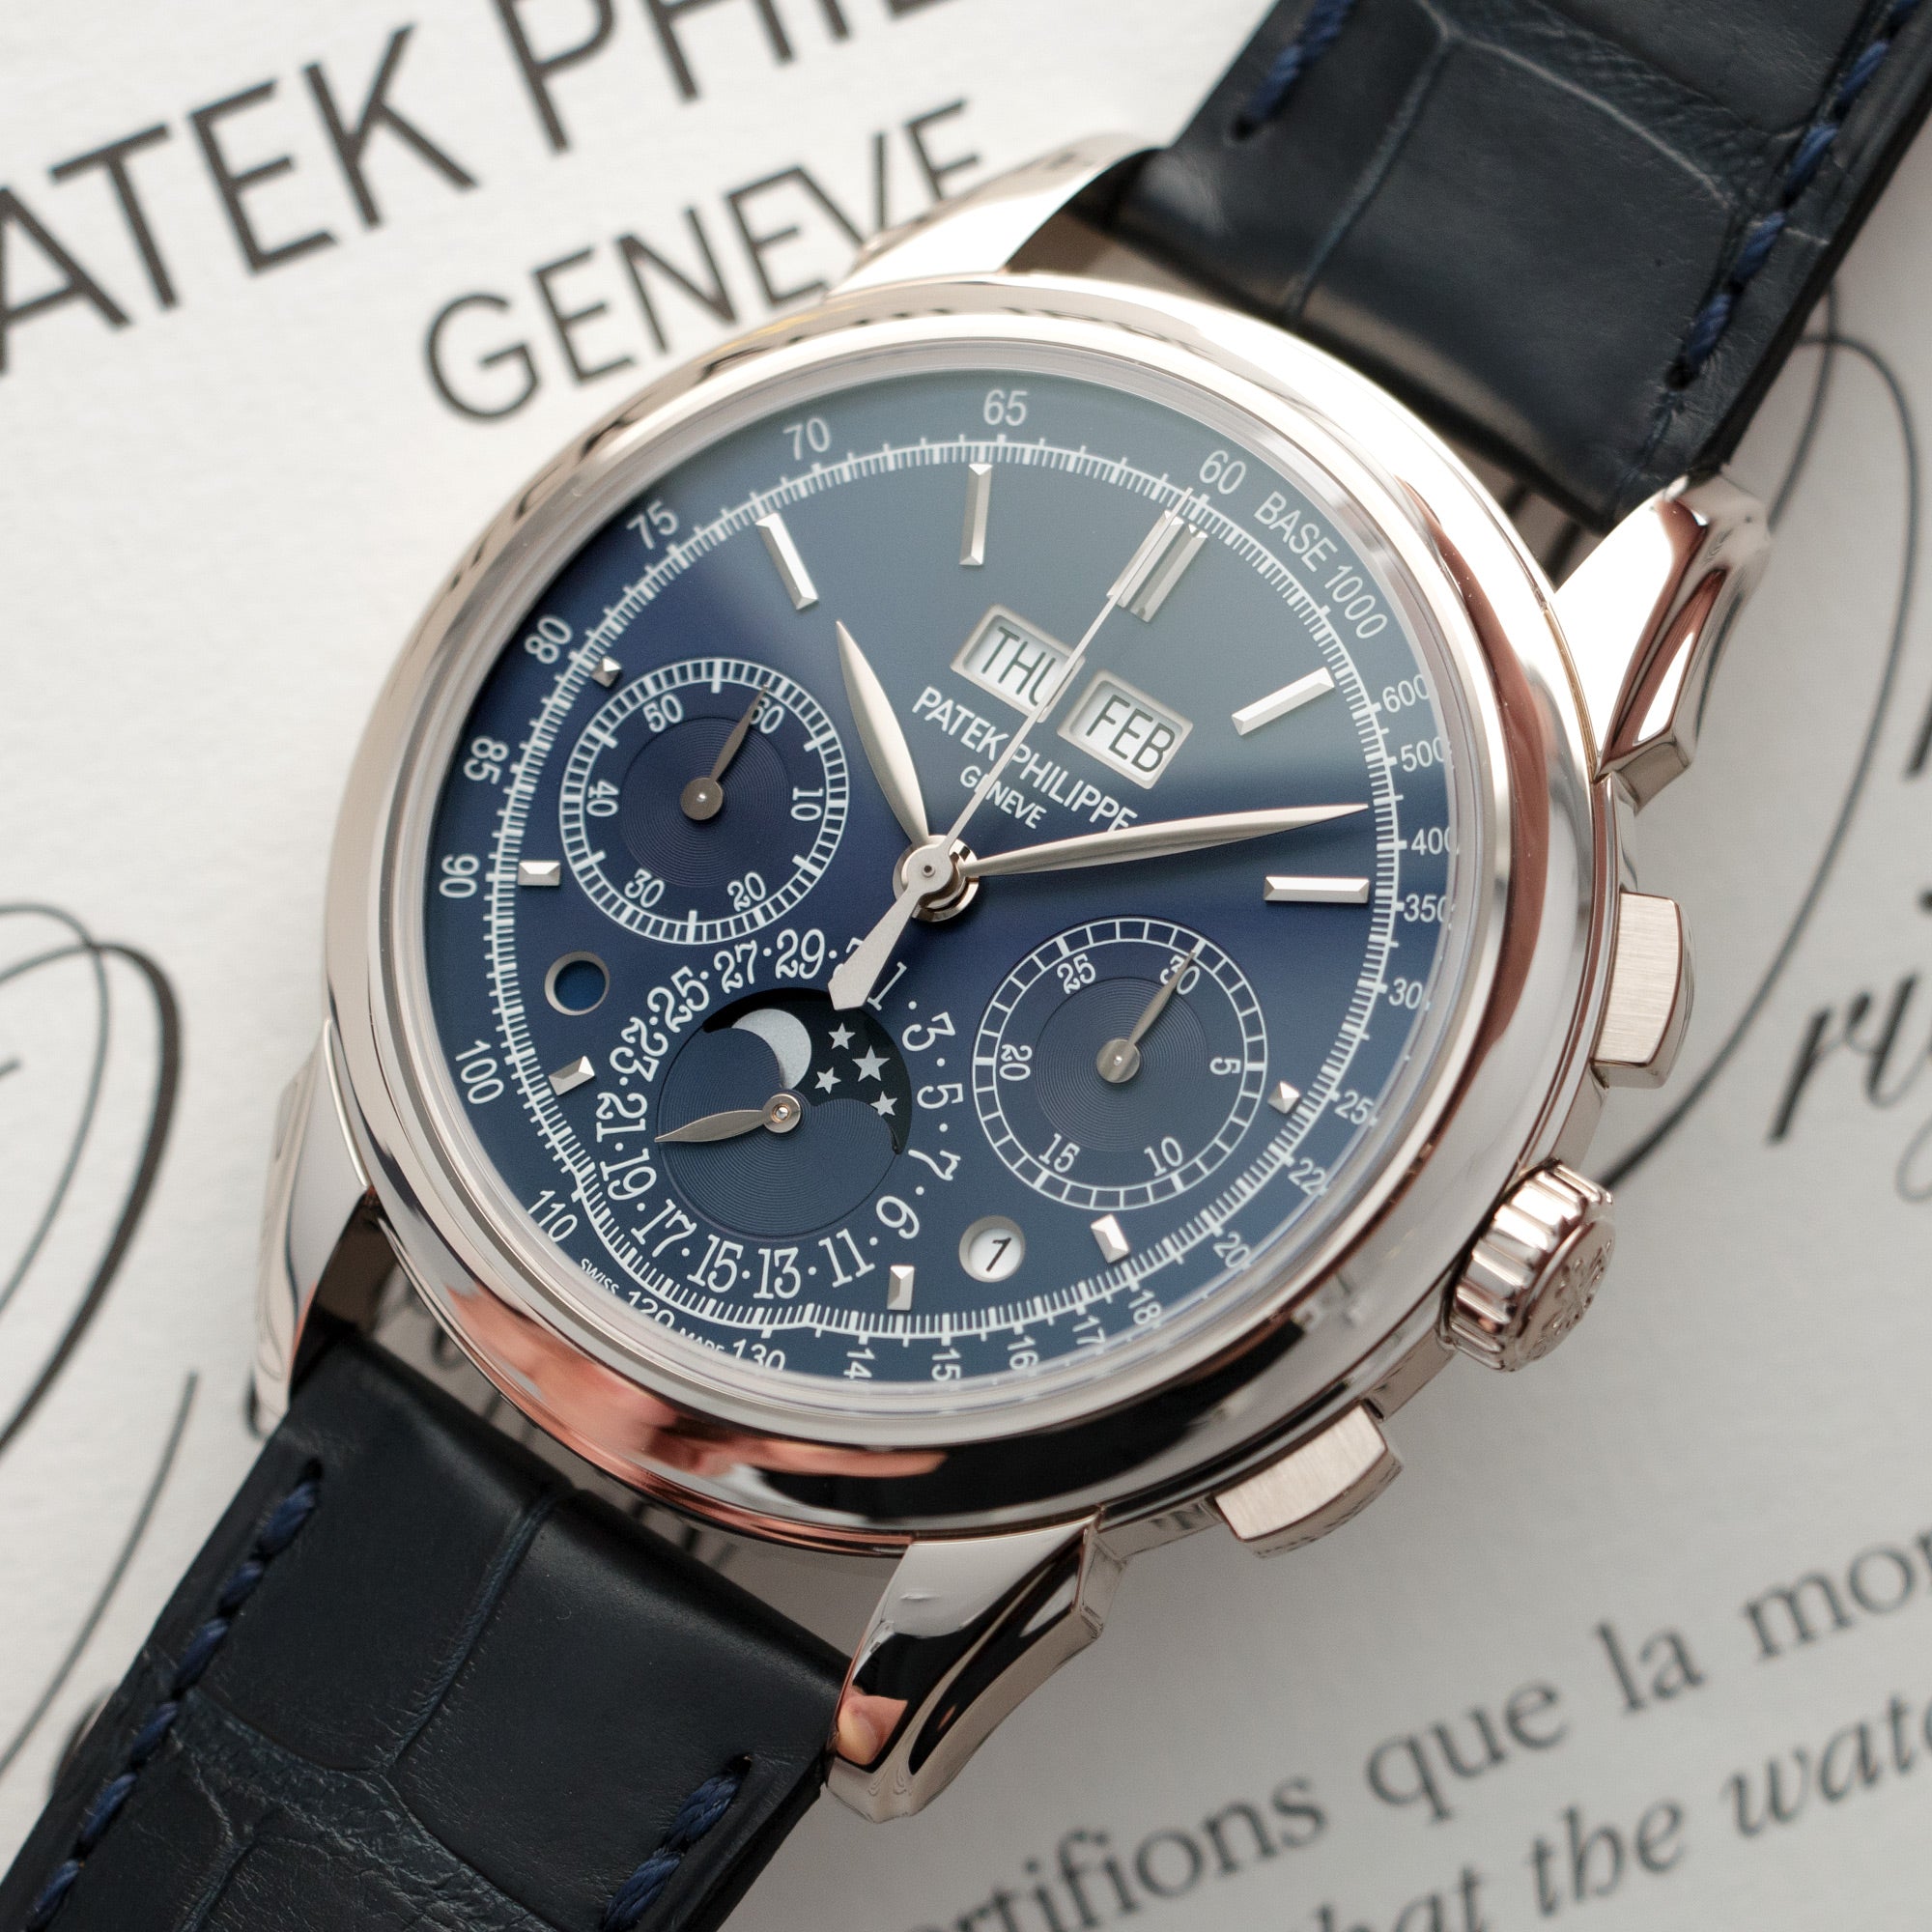 Patek Philippe - Patek Philippe White Gold Perpetual Chronograph Watch Ref. 5270 - The Keystone Watches